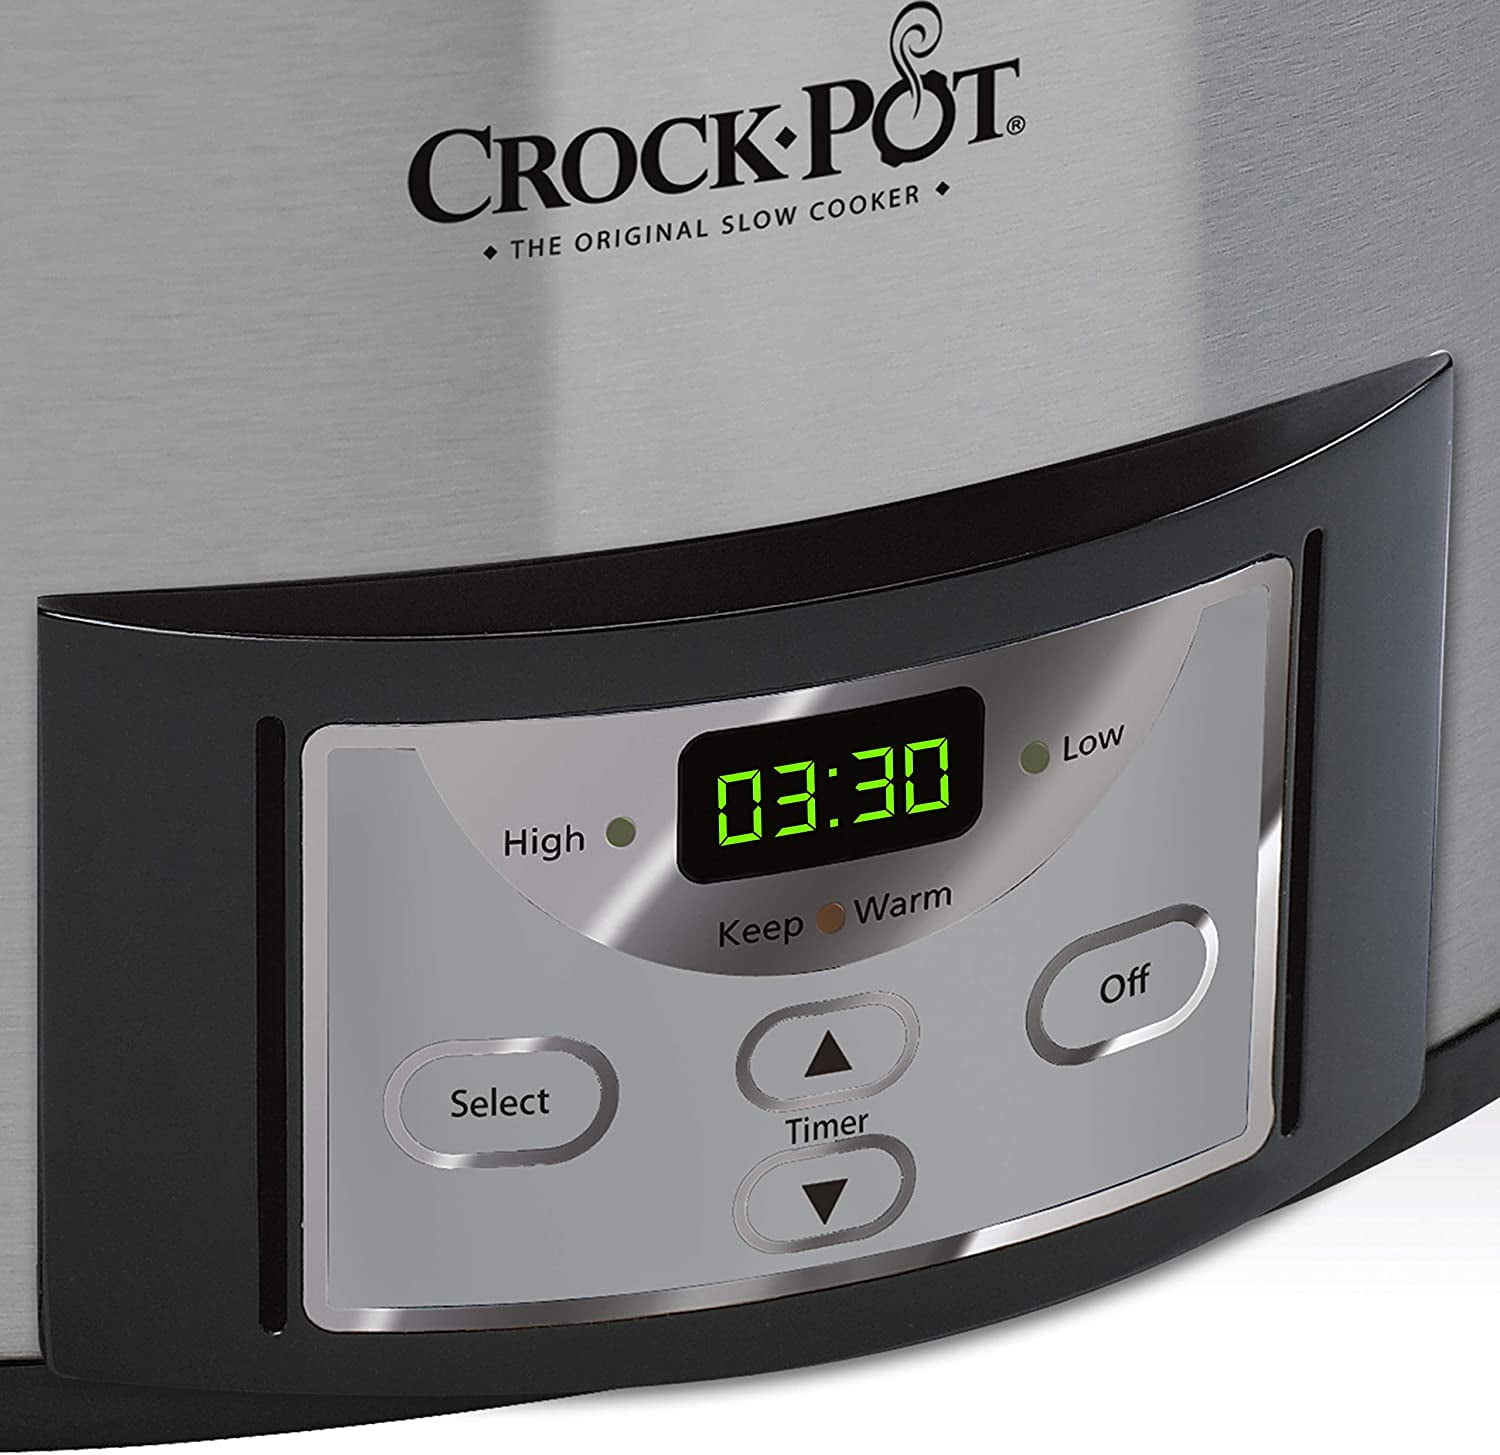 RopeSoapNDope. Crock-Pot 6 Quart Slow Cooker